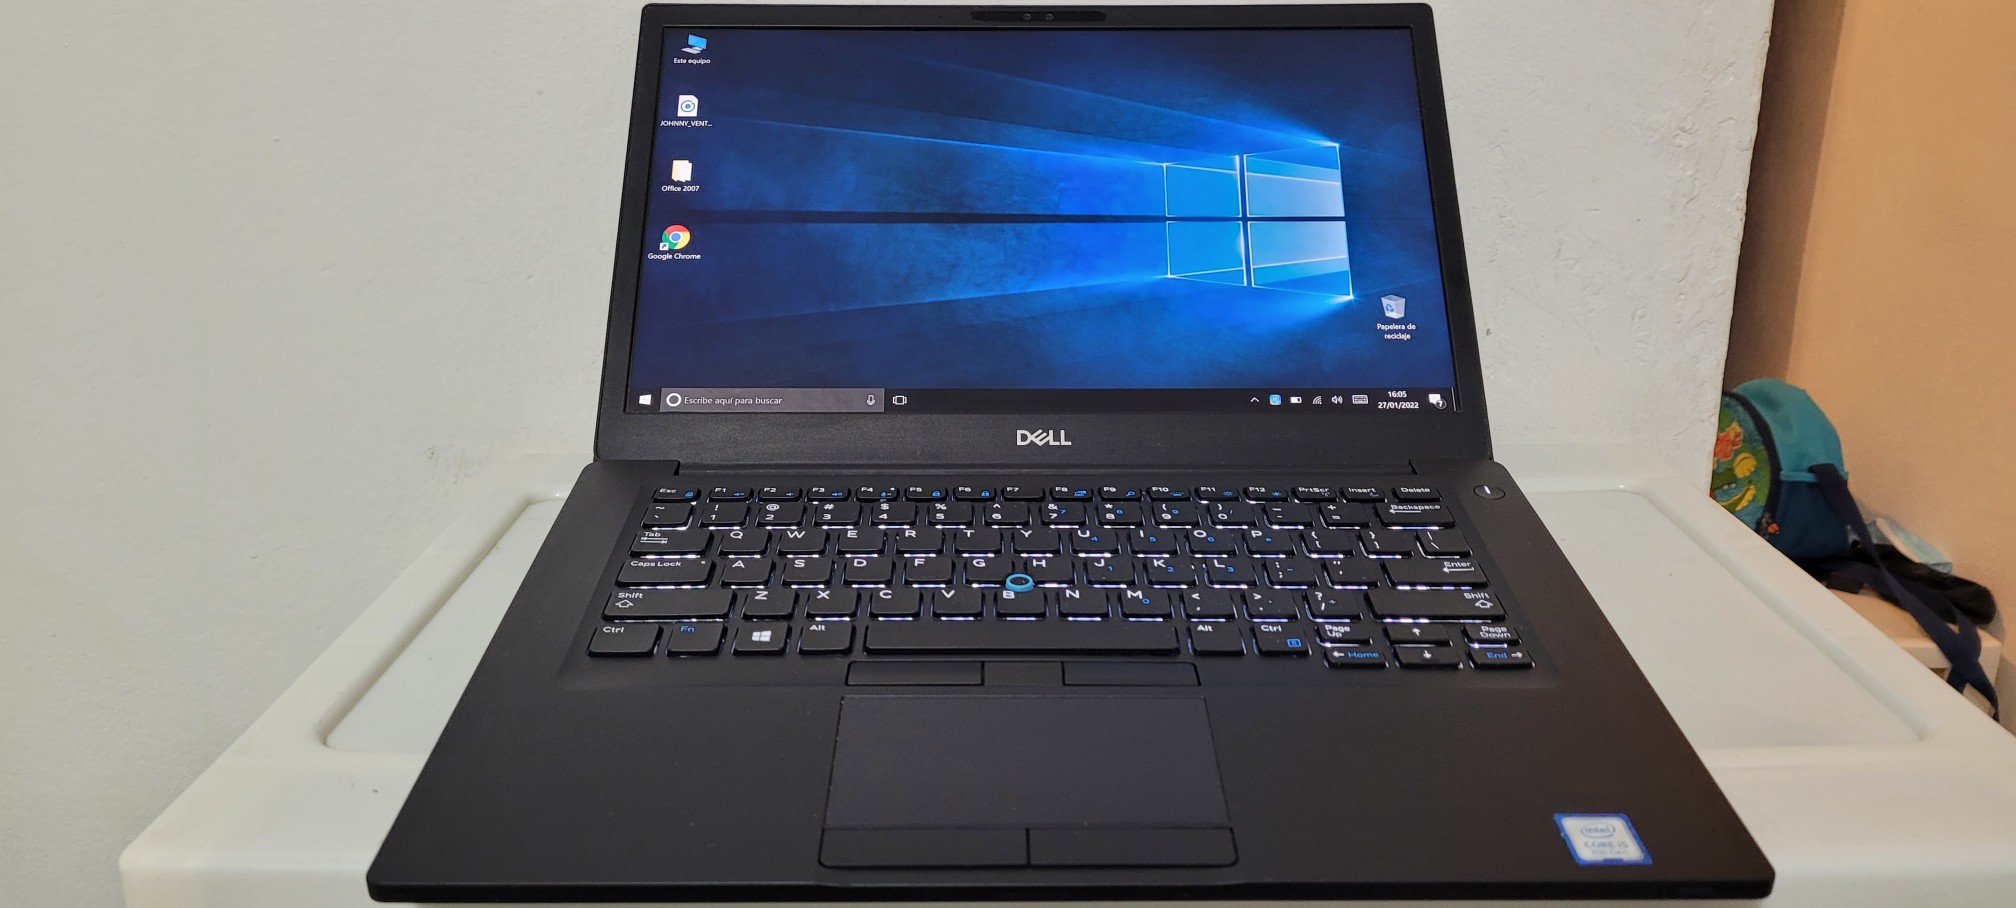 computadoras y laptops - Laptop Dell Slim 14 Pulg Core i7 6ta Ram 8gb ddr4 Disco 256gb SSD Full 1080p